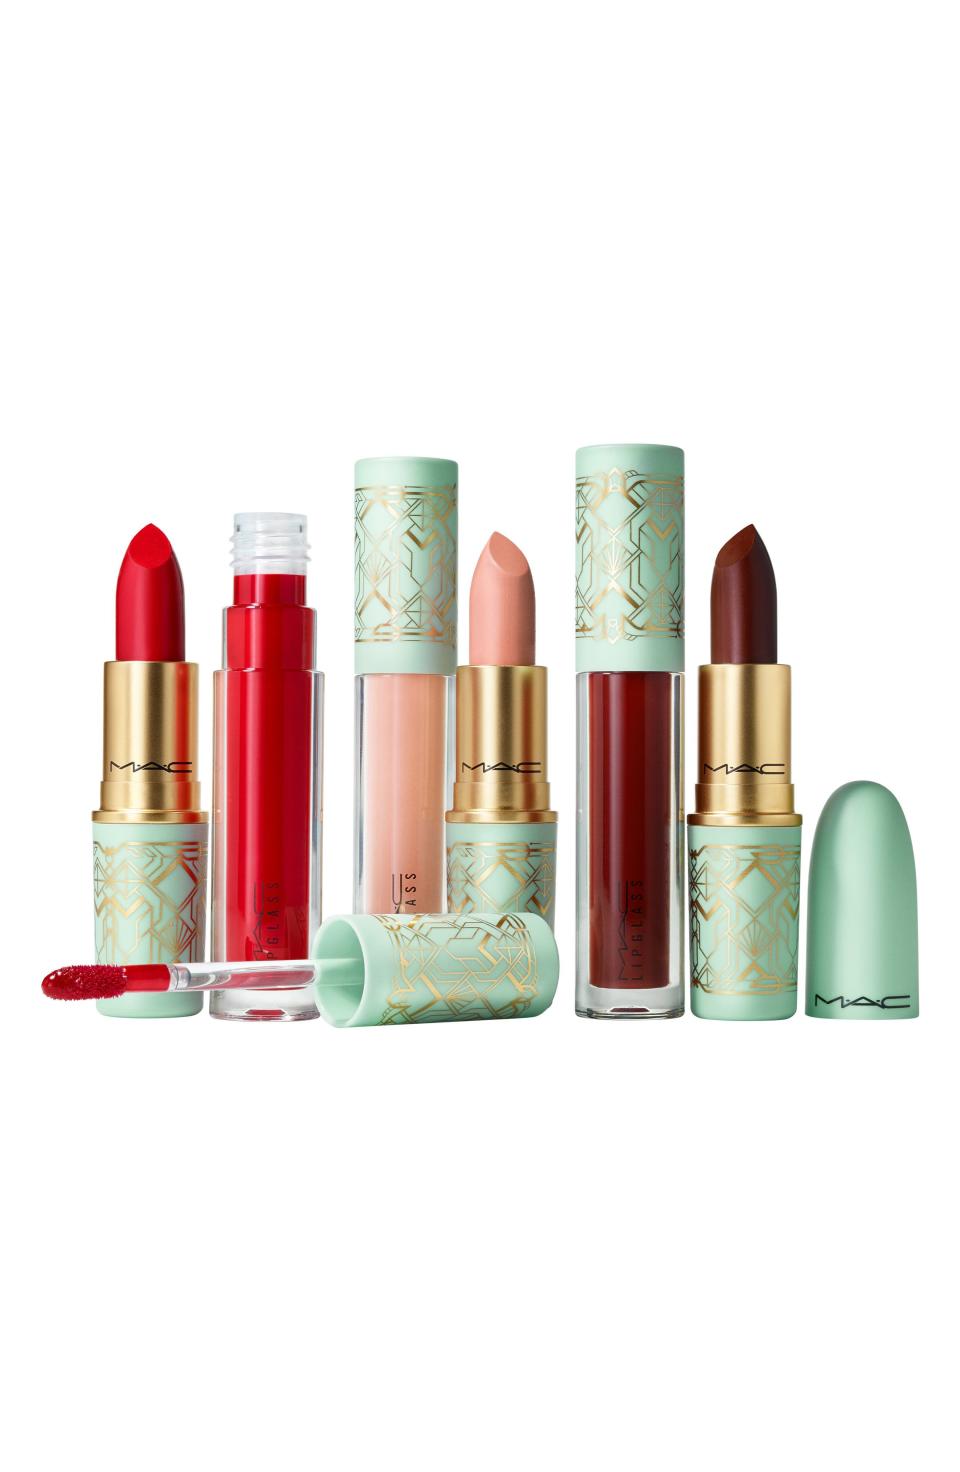 29) Lipstick & Lipglass Set ($108 Value)